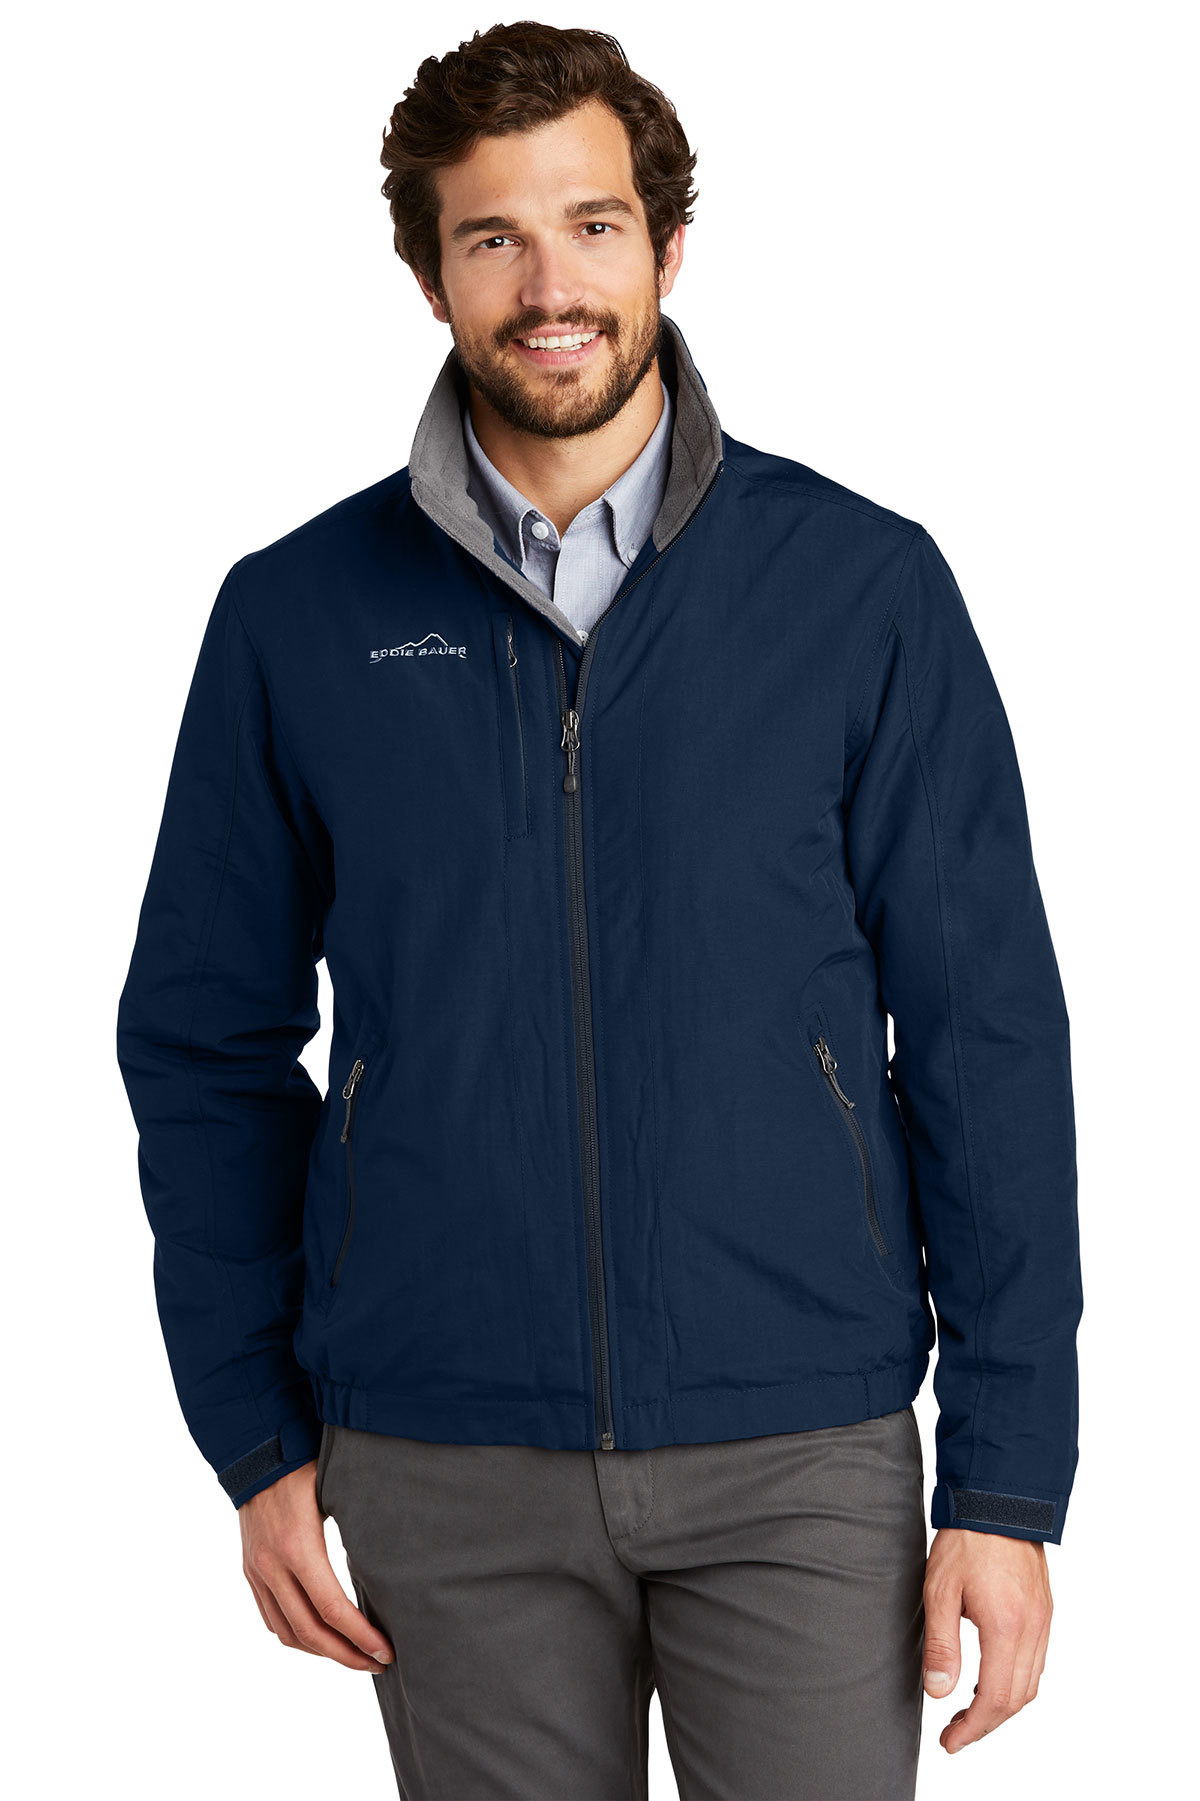 Pivotal - Eddie Bauer® - Fleece-Lined Jacket – Spirit Services Company